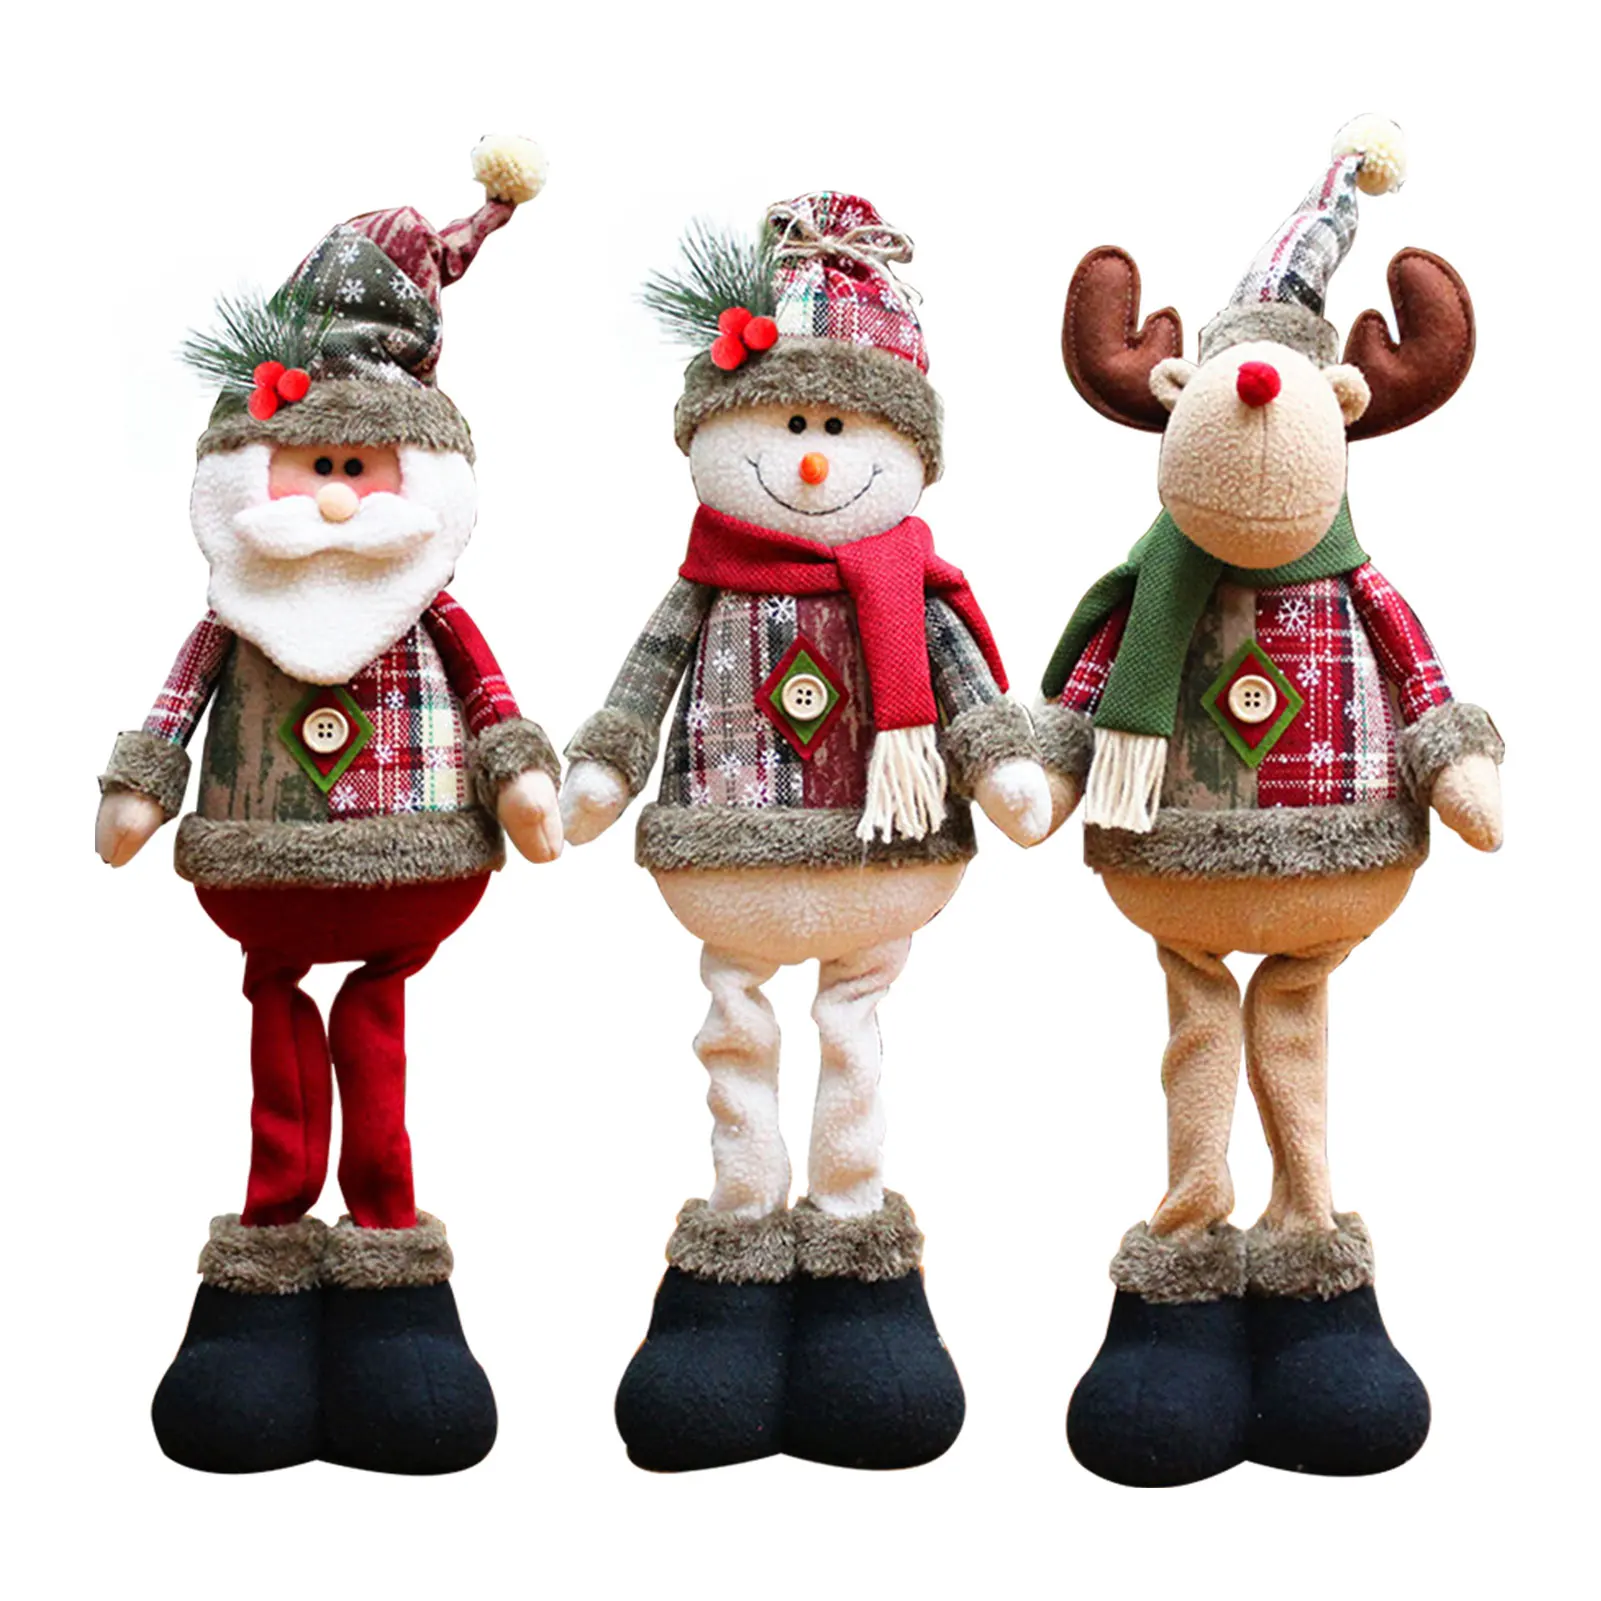 

3pcs/set Ornament Santa Doll Home Snowman Elk Portable Showcase Desktop Christmas Decor Free Standing Festival Holiday Gift